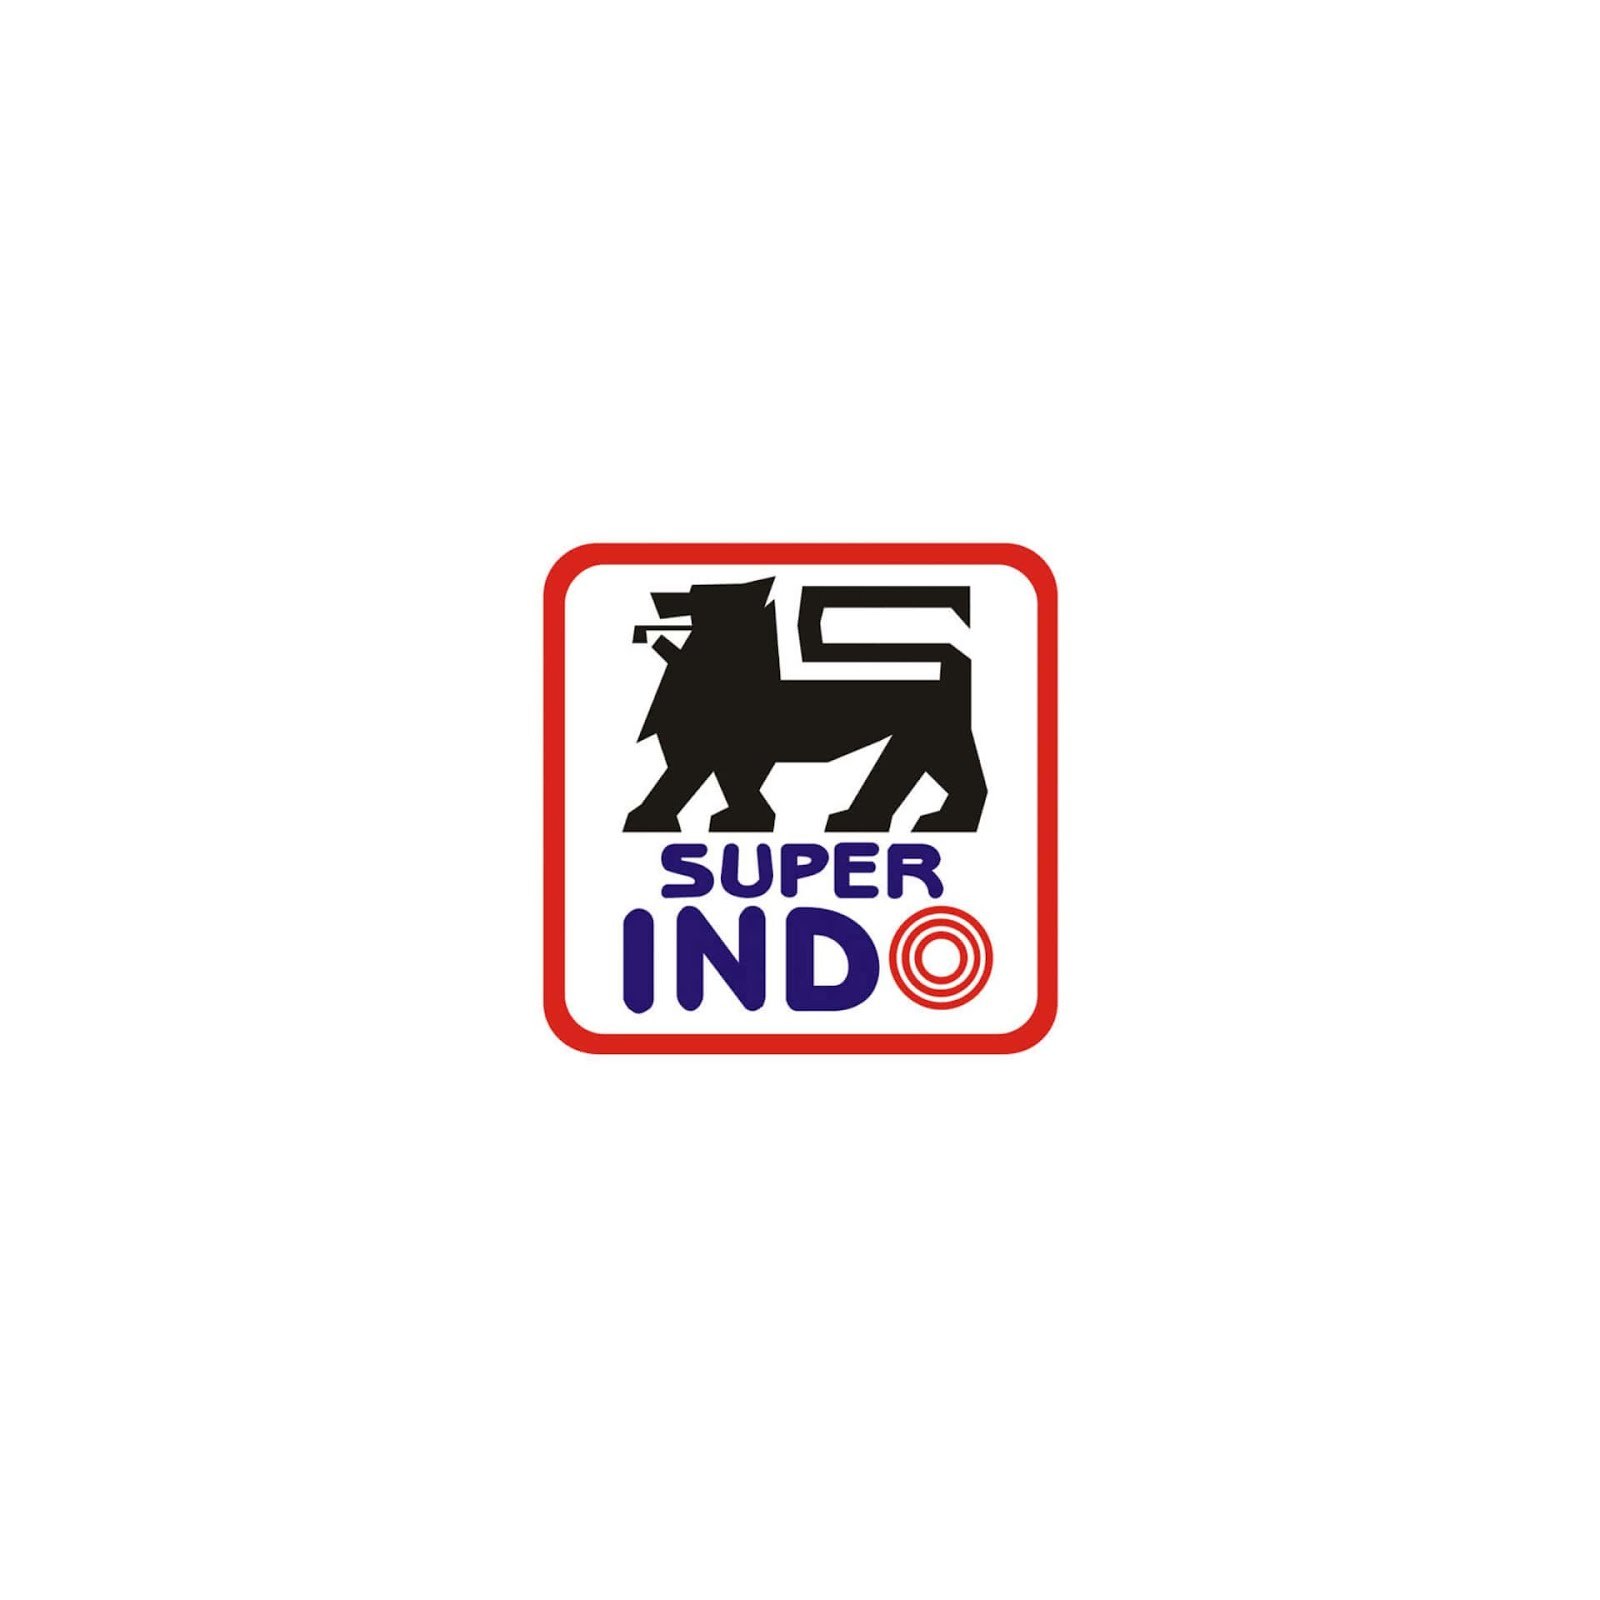 Lowongan Kerja PT Lion Super Indo Terbaru